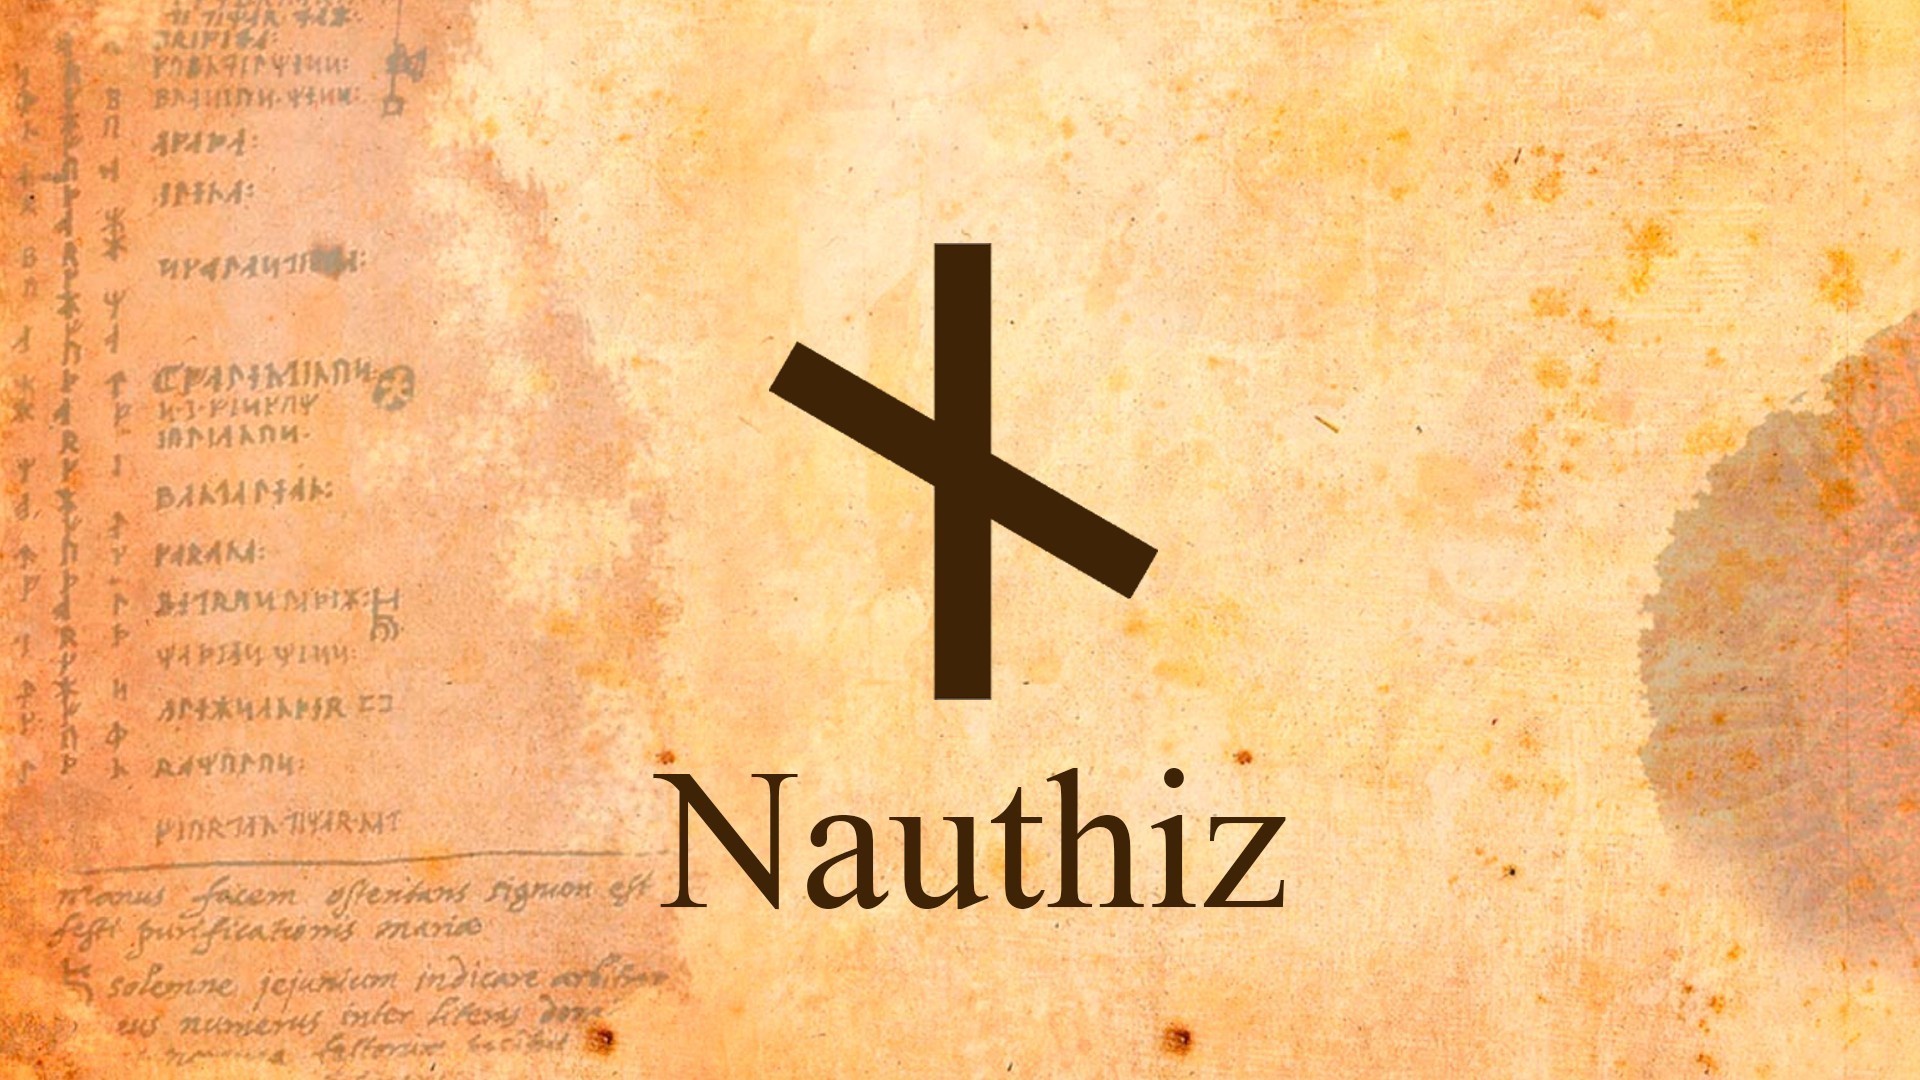 A Runa Nauthiz e Seus Significados | Curso de Runas